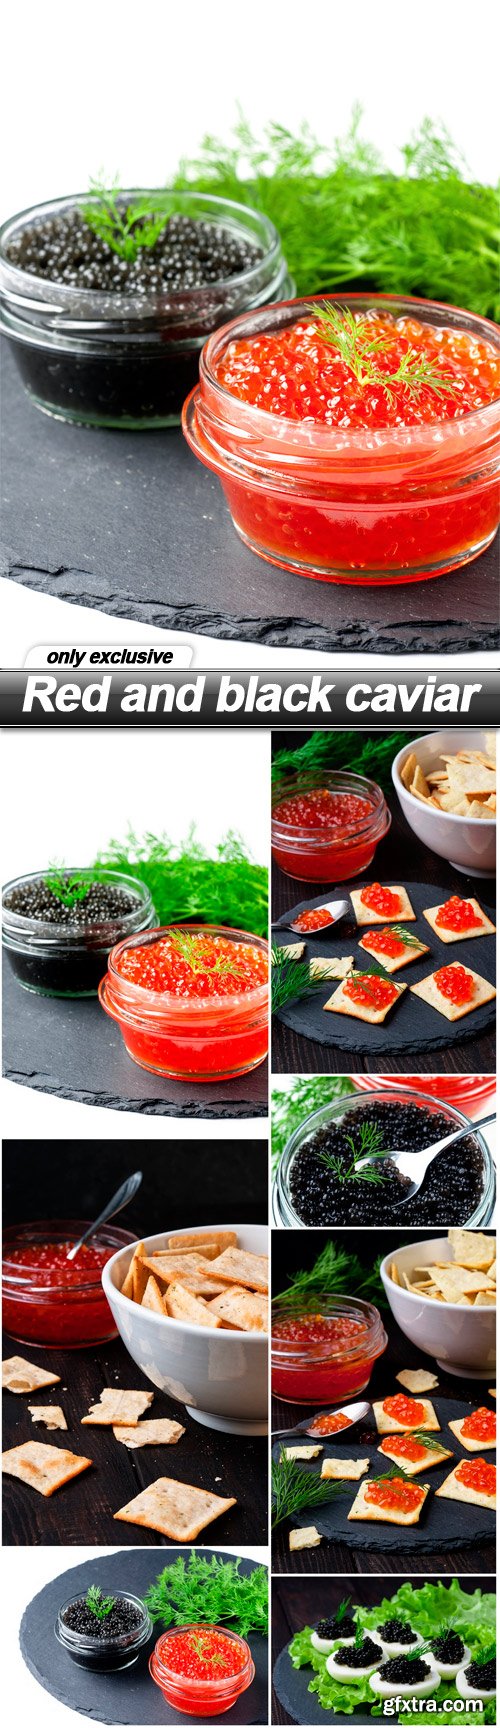 Red and black caviar - 7 UHQ JPEG